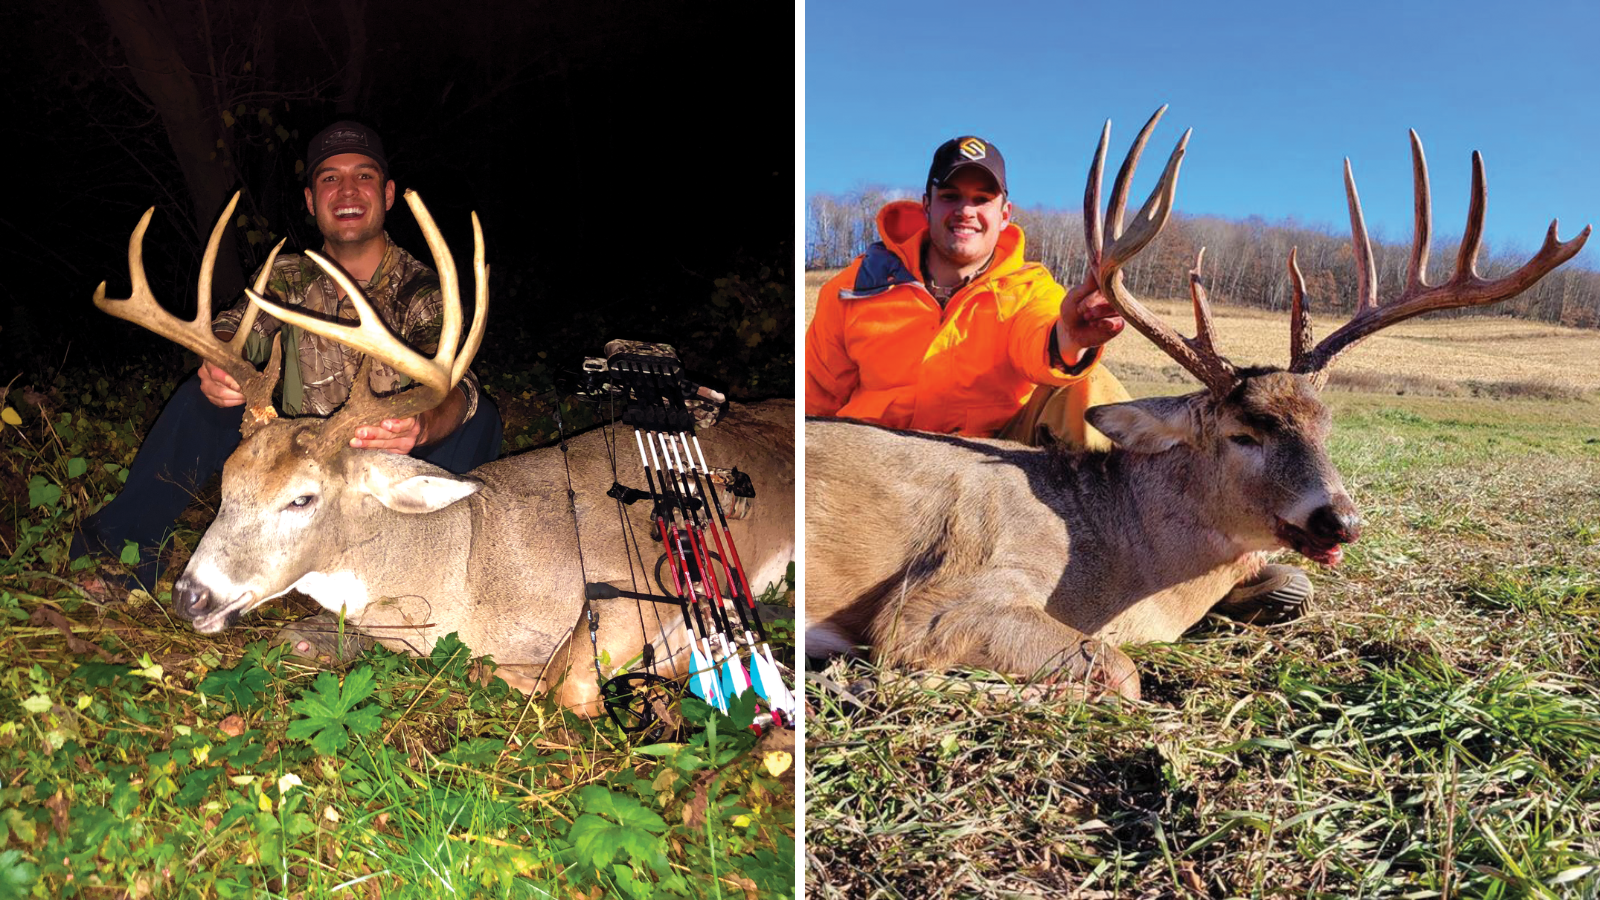 Wisconsin deer hunter meets friendly 8-point buck during hunt